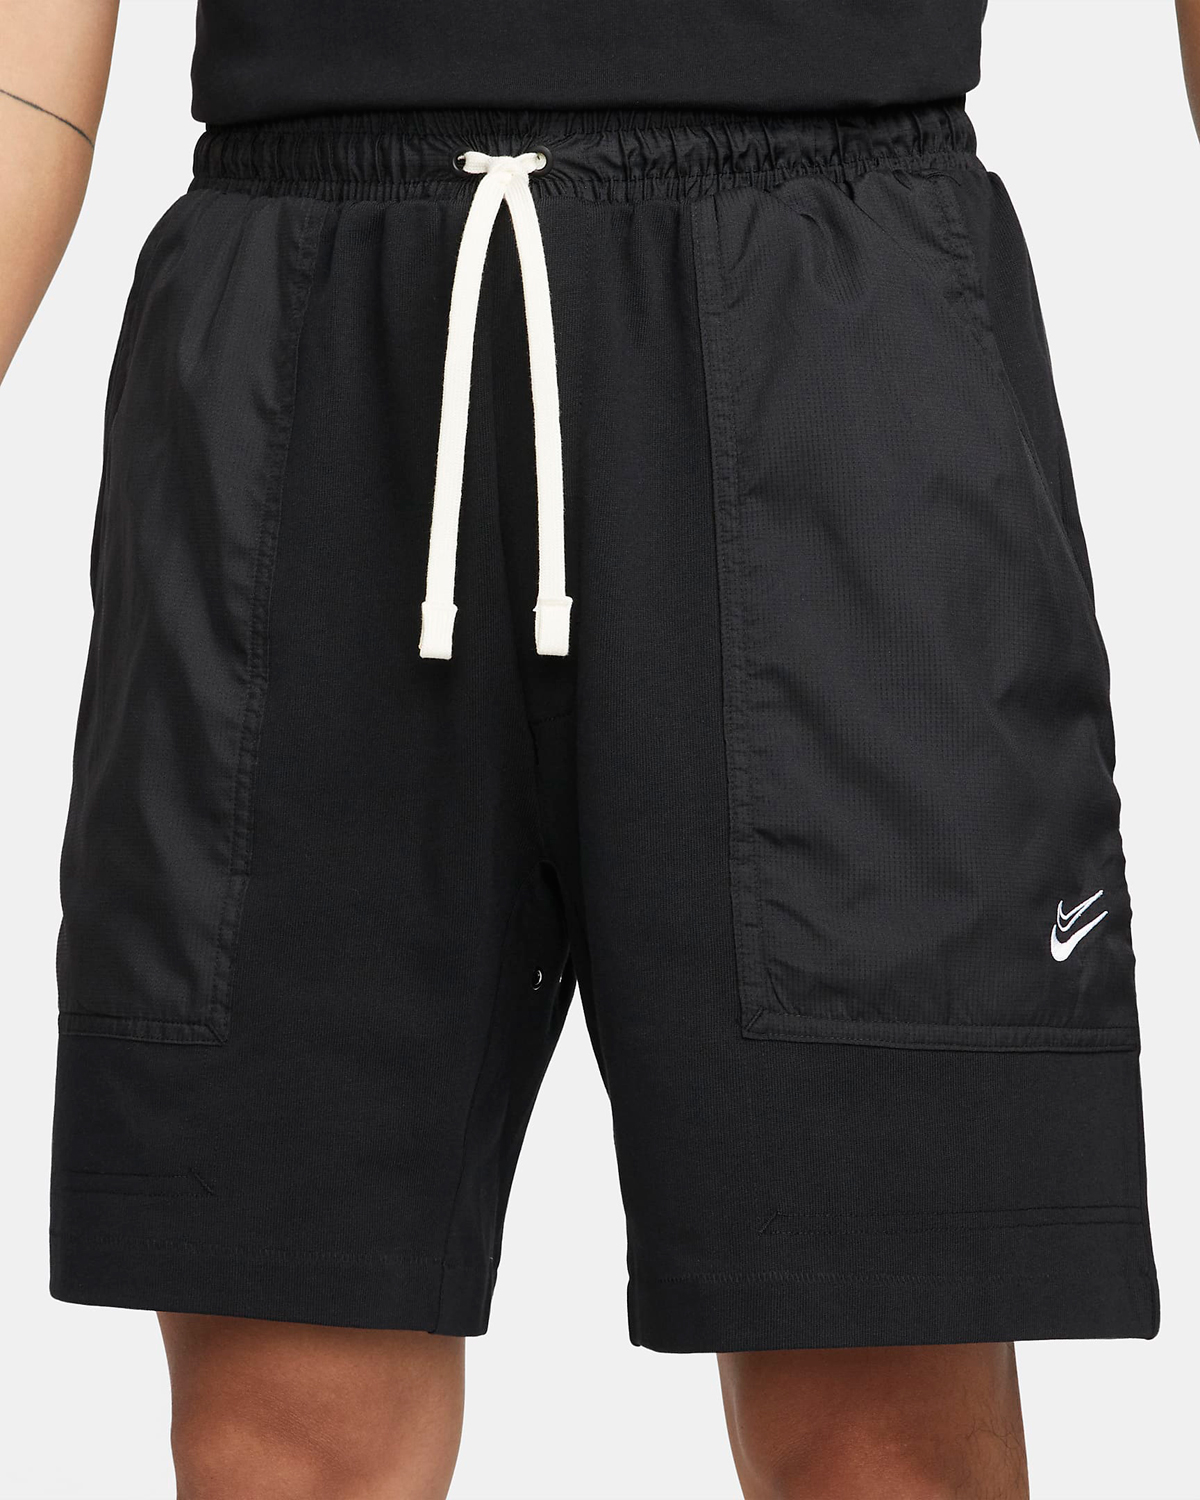 Nike-KD-Kevin-Durant-Fleece-Basketball-Shorts-Black-White-2